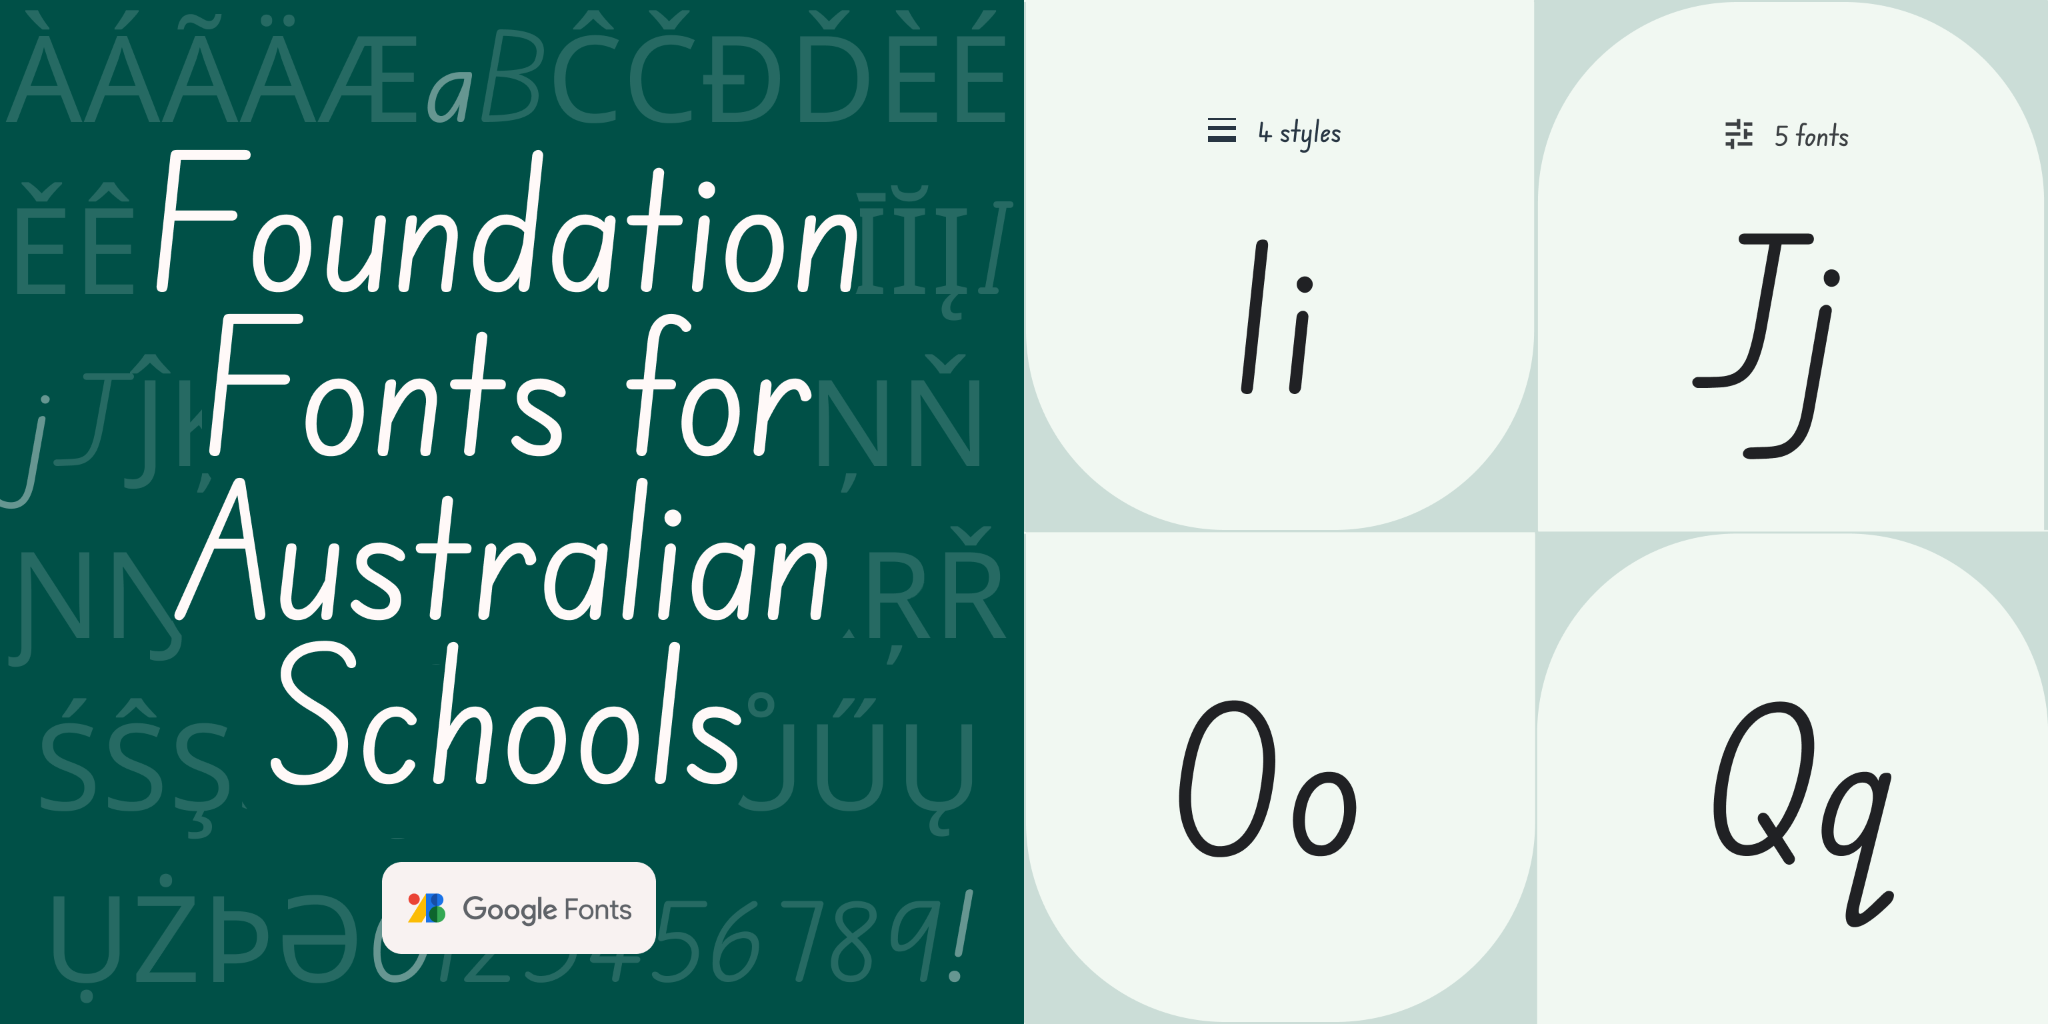 Foundation fonts for Australian schools, 4 styles, 5 fonts